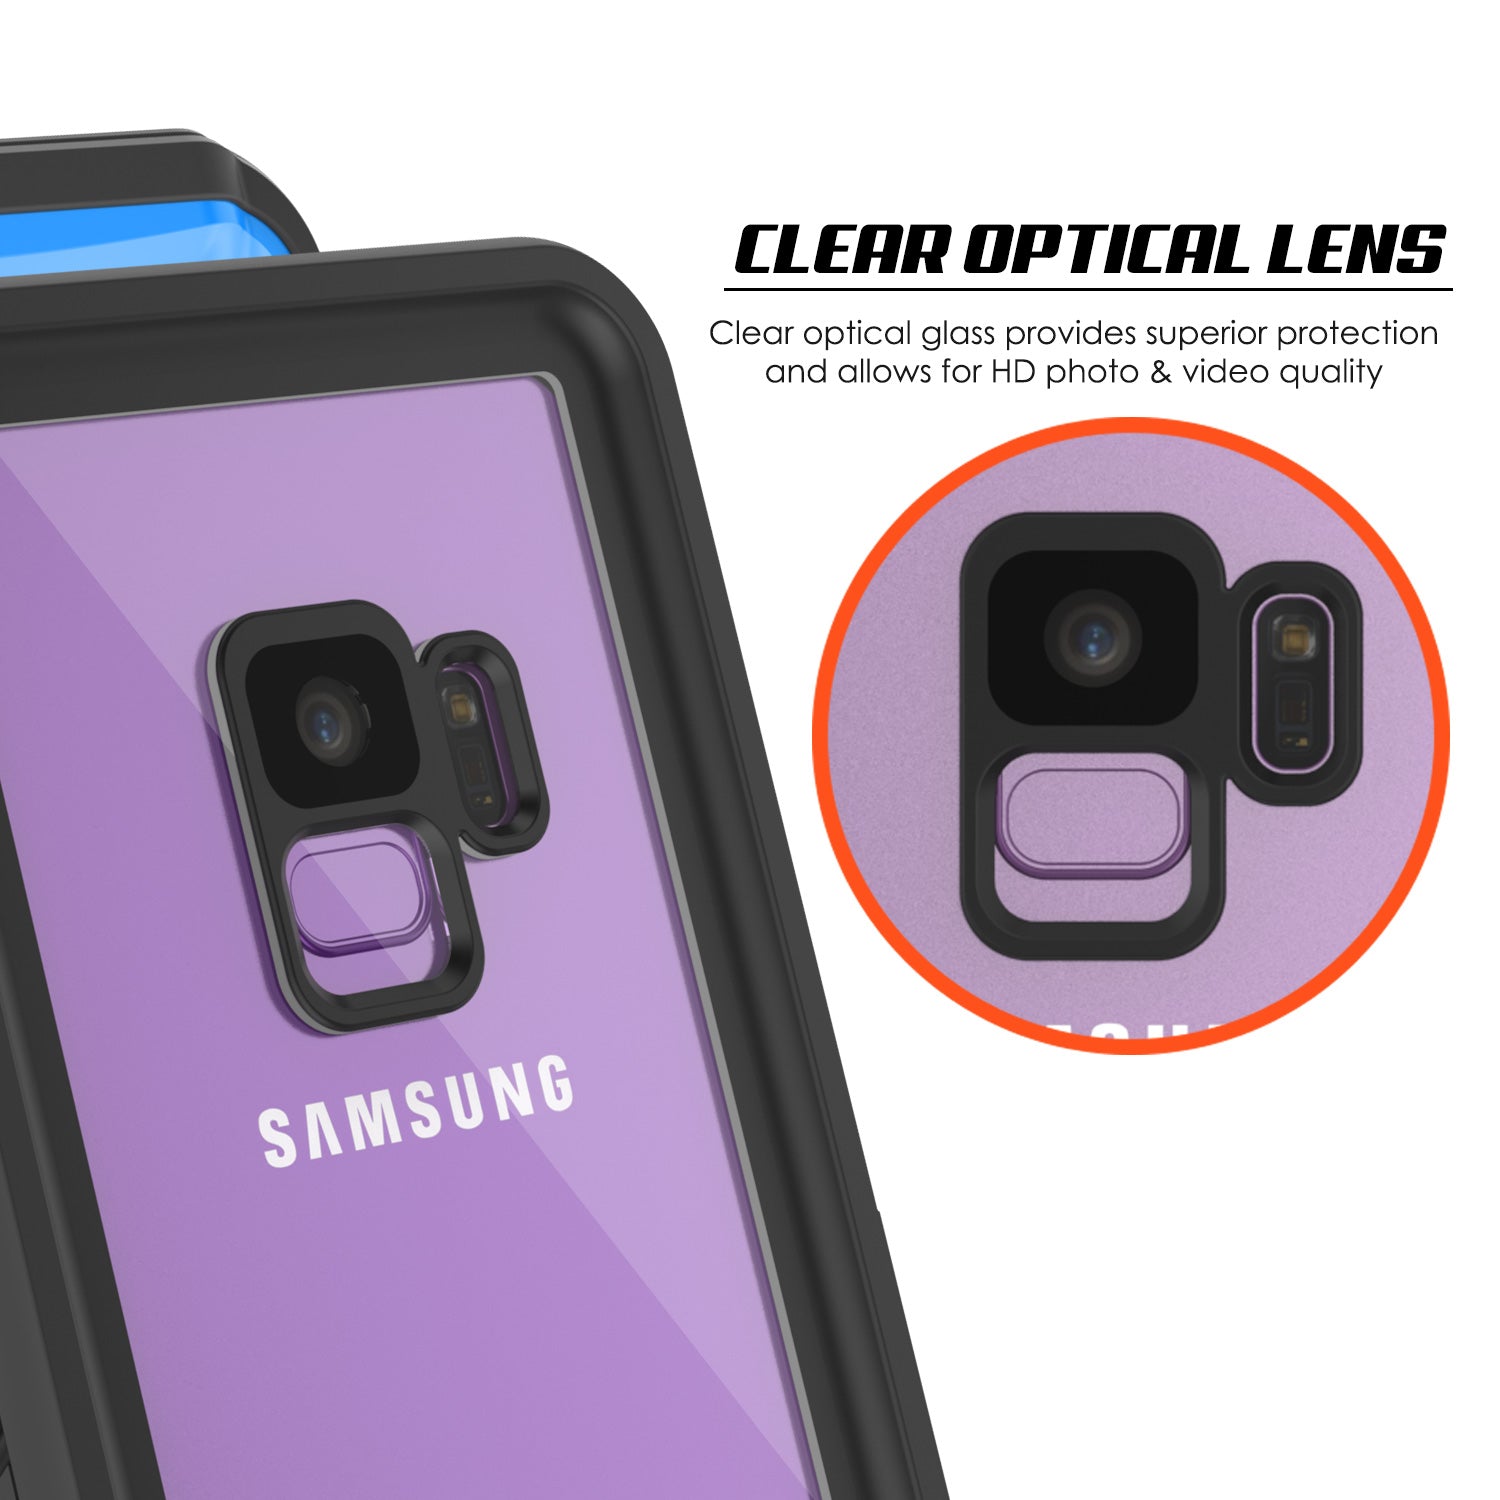 Galaxy S9 Water/Shock/DirtProof Slim Fit Case [Light Blue]